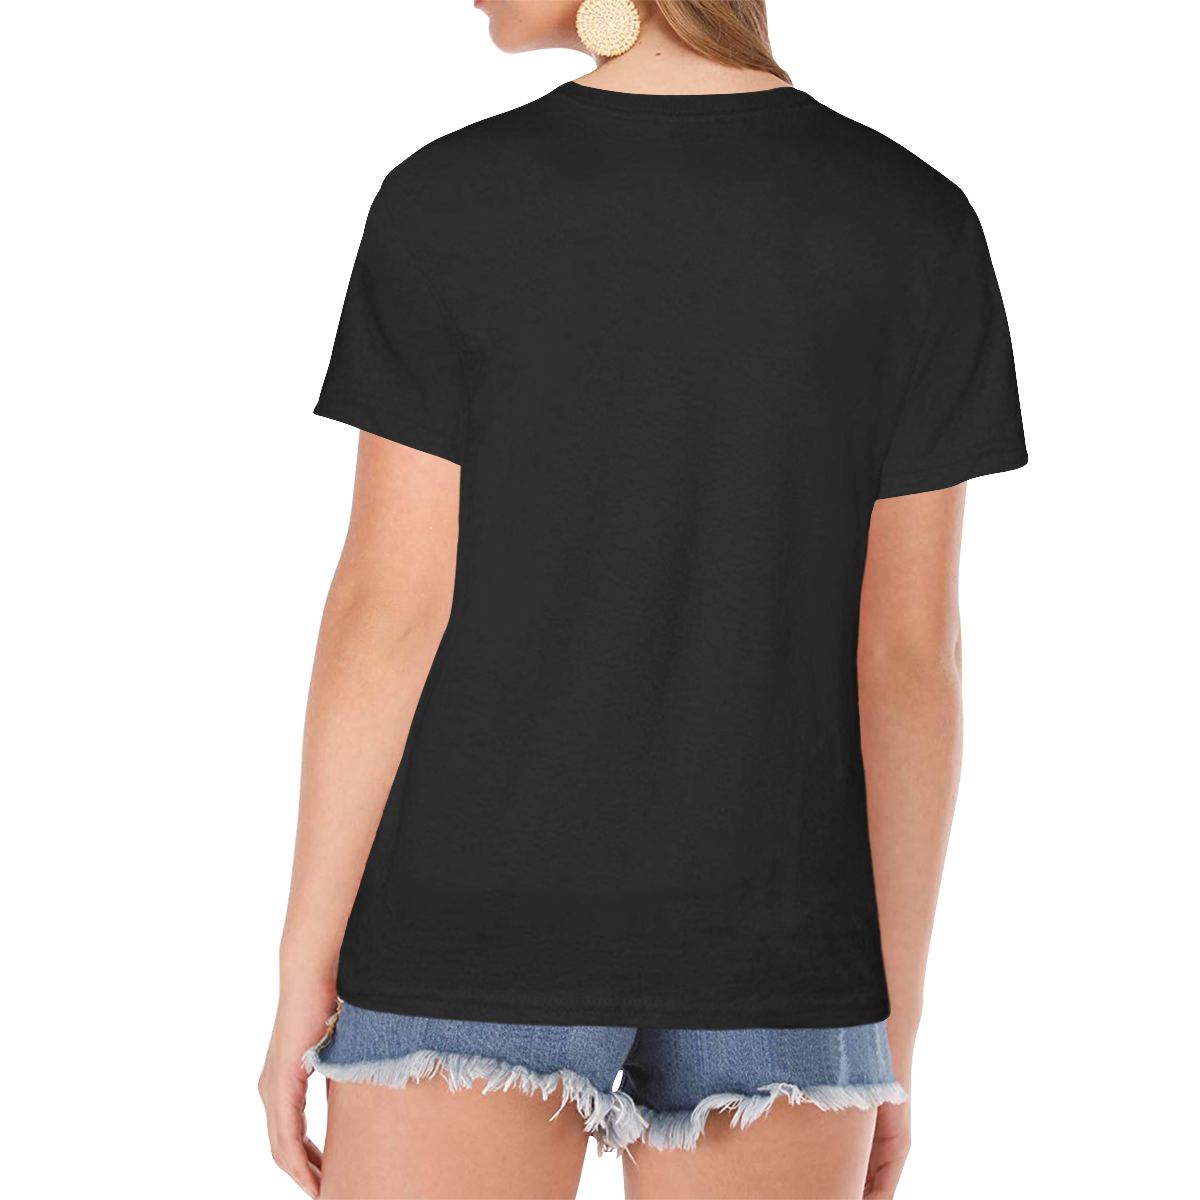 Low Poly Flowers Women's Raglan T-Shirt/Front Printing (Model T62)